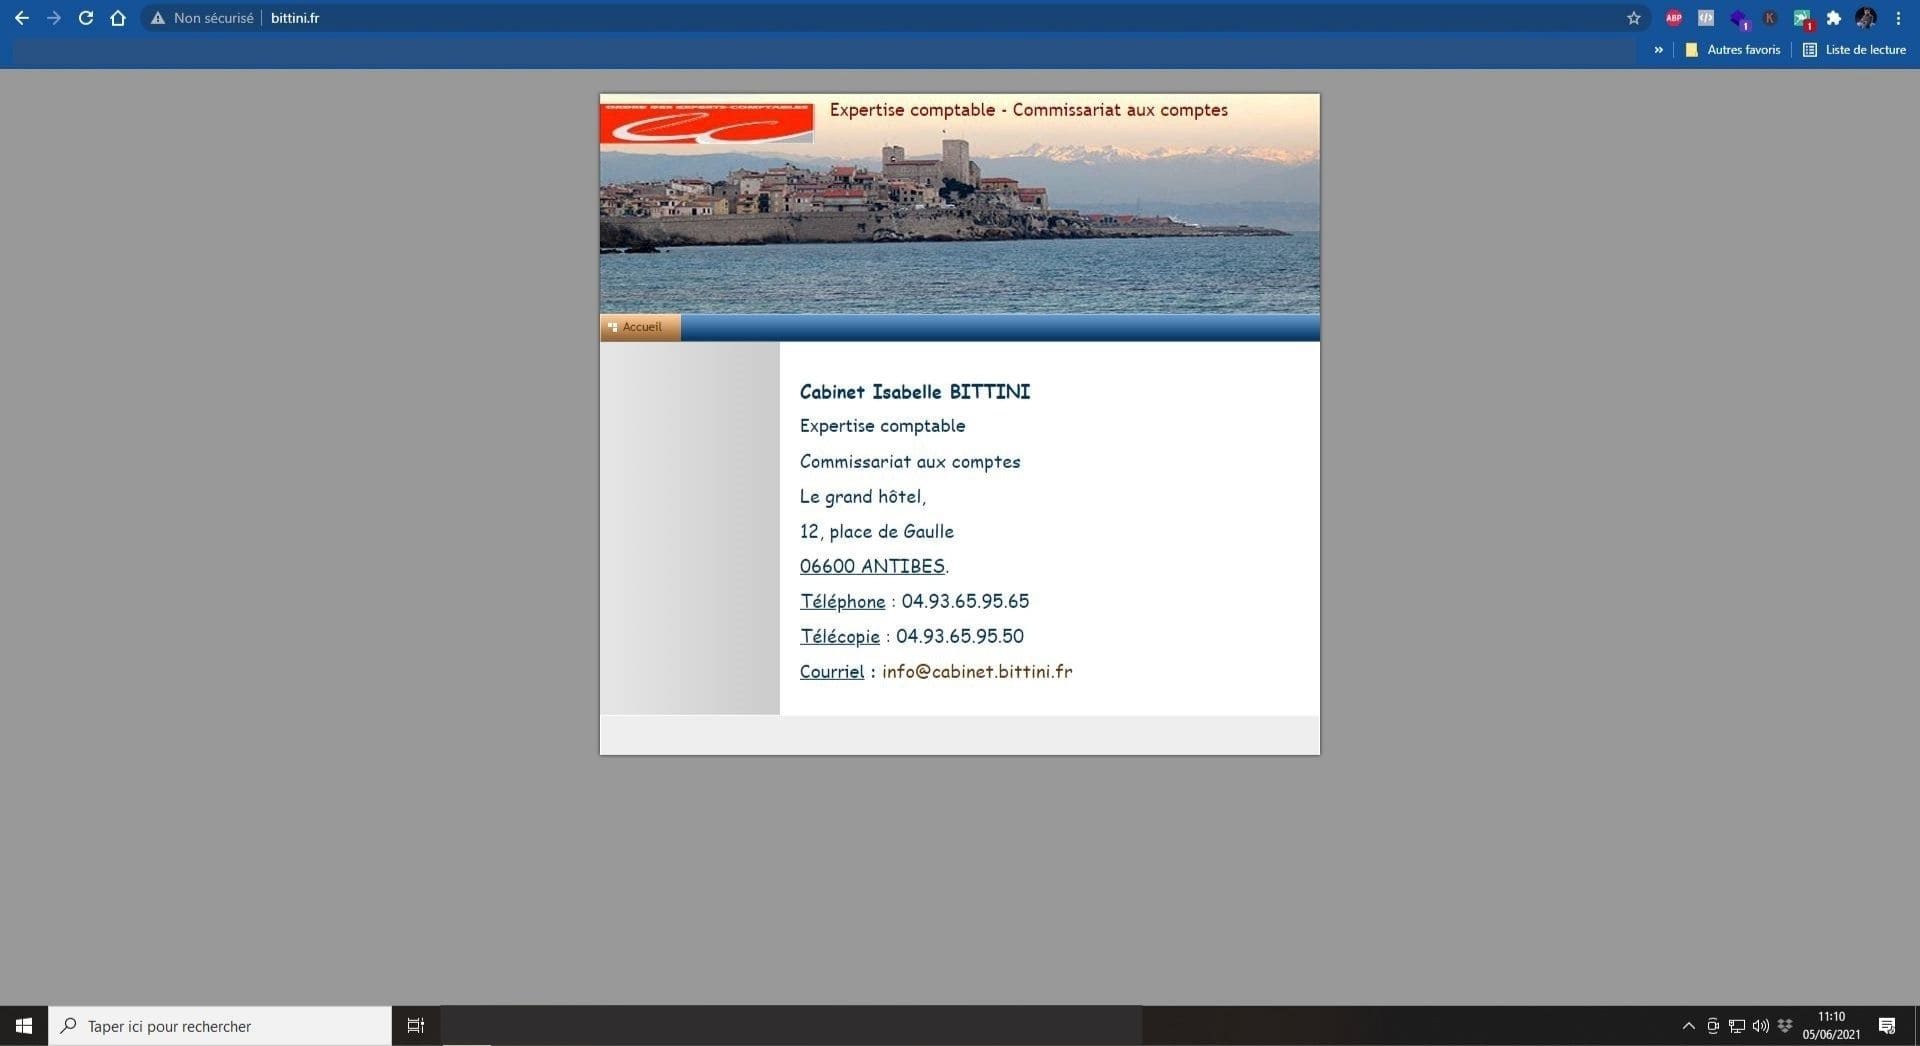 Site web du Cabinet Bittini avant la refonte